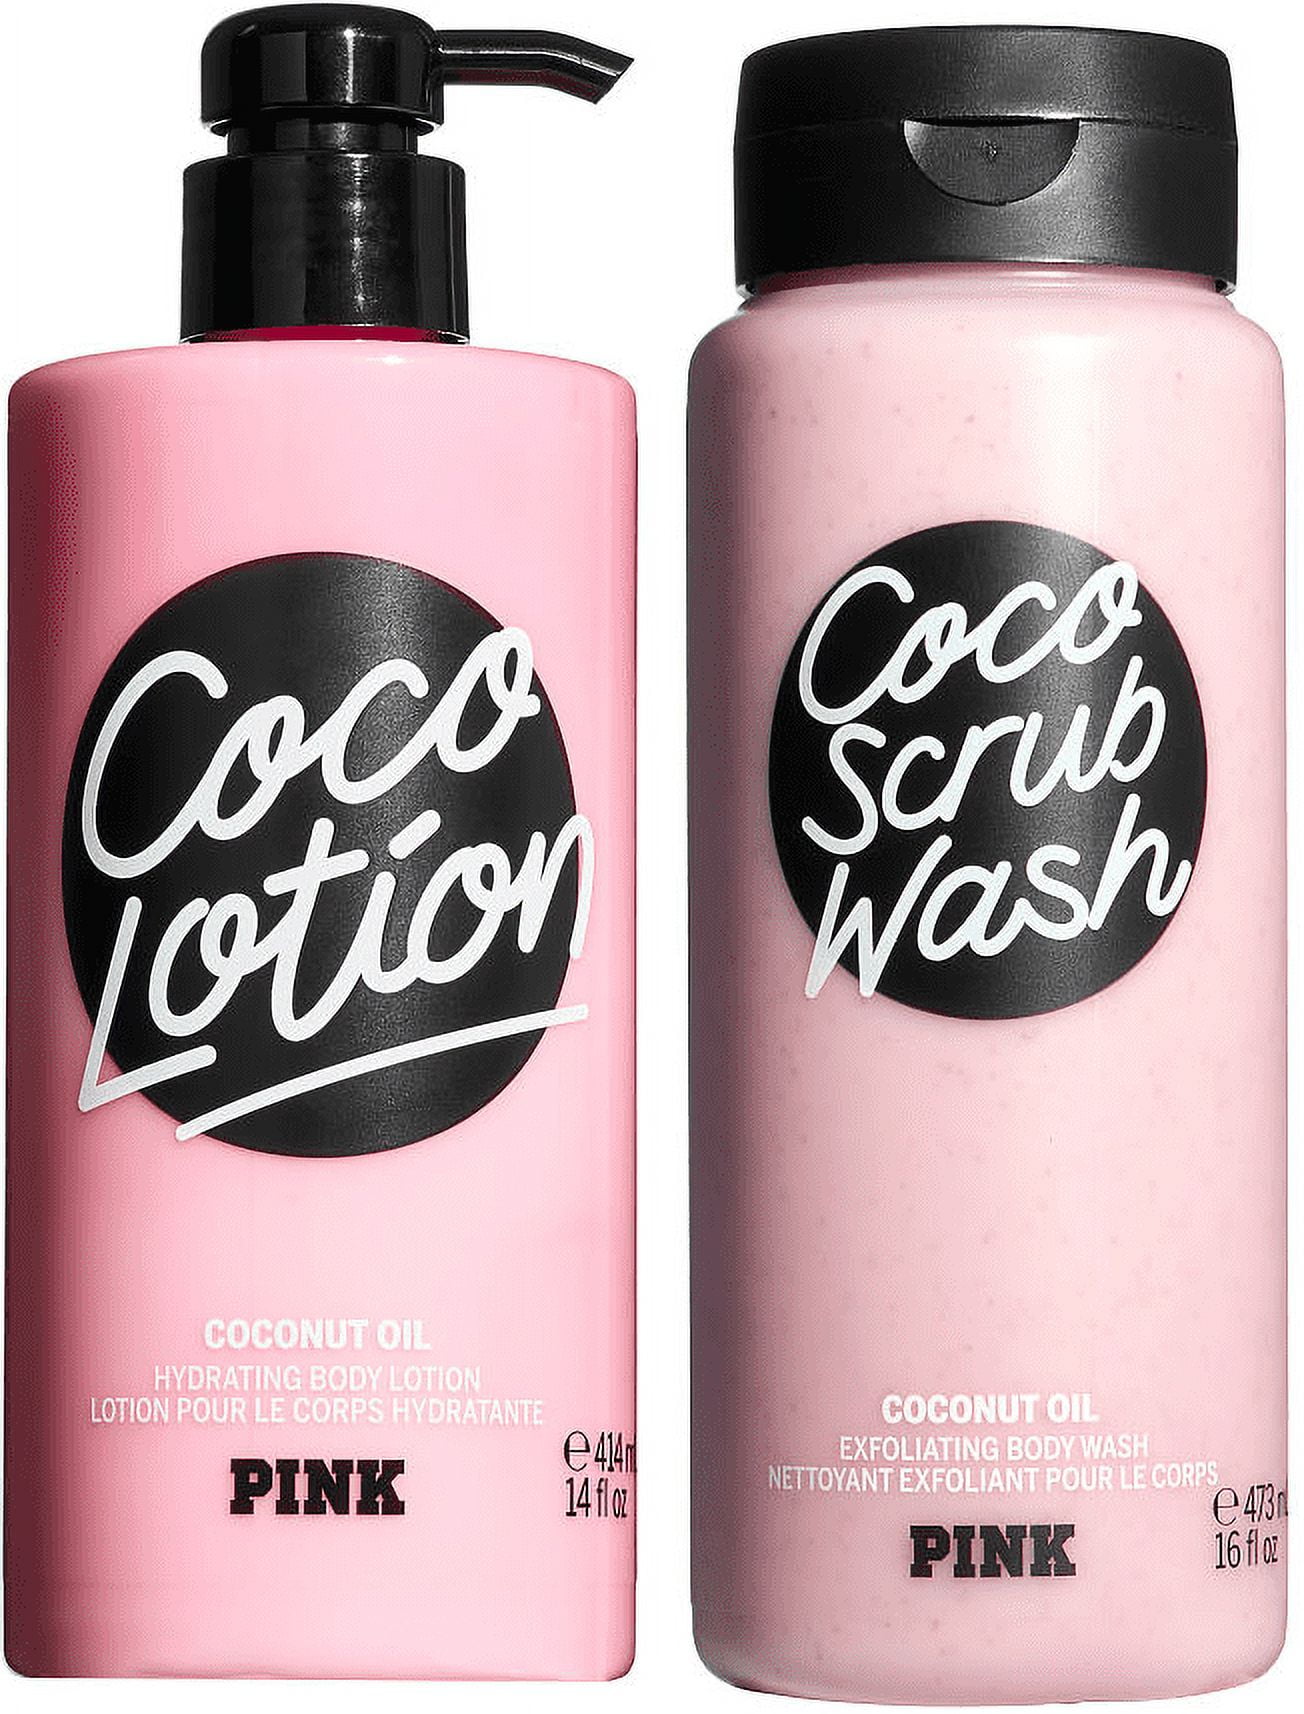 PINK/Victoria's Secret Coco Scrub Wash and Coco Lotion Set of 2